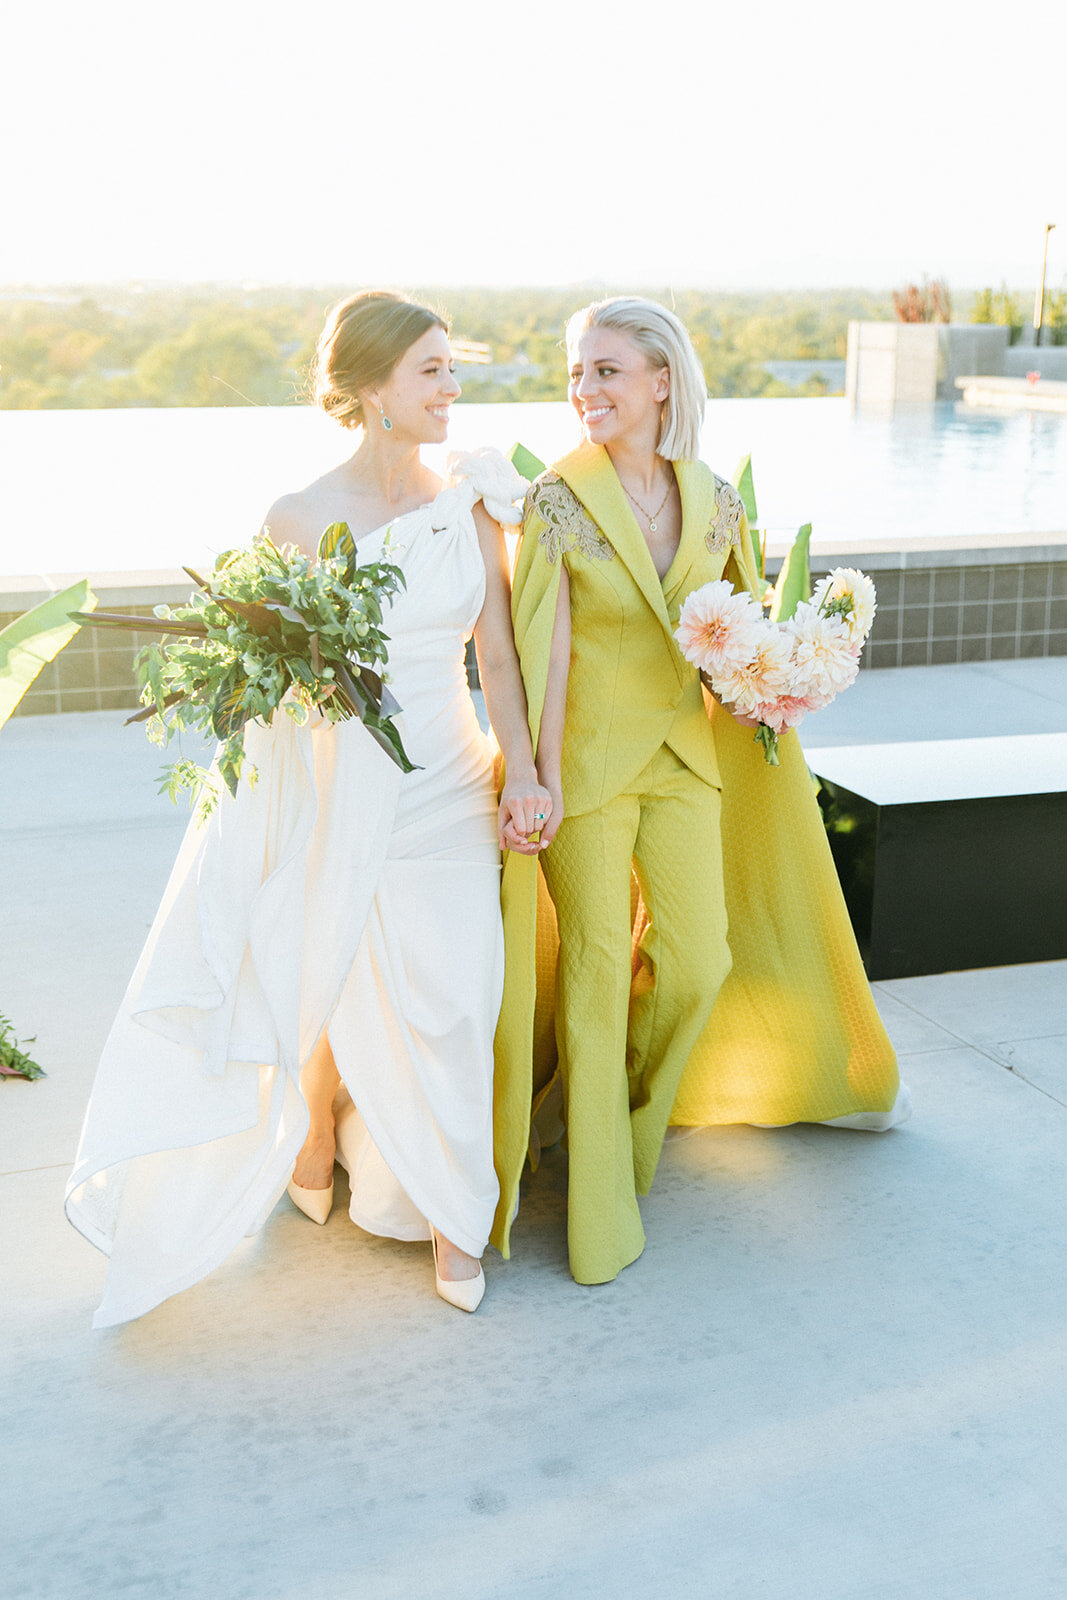 utah-bride-and-groom-wedding-magazine-lesbian-editorial-salt-lake-city-wedding-michael-cozzens-photo-video-653.jpg